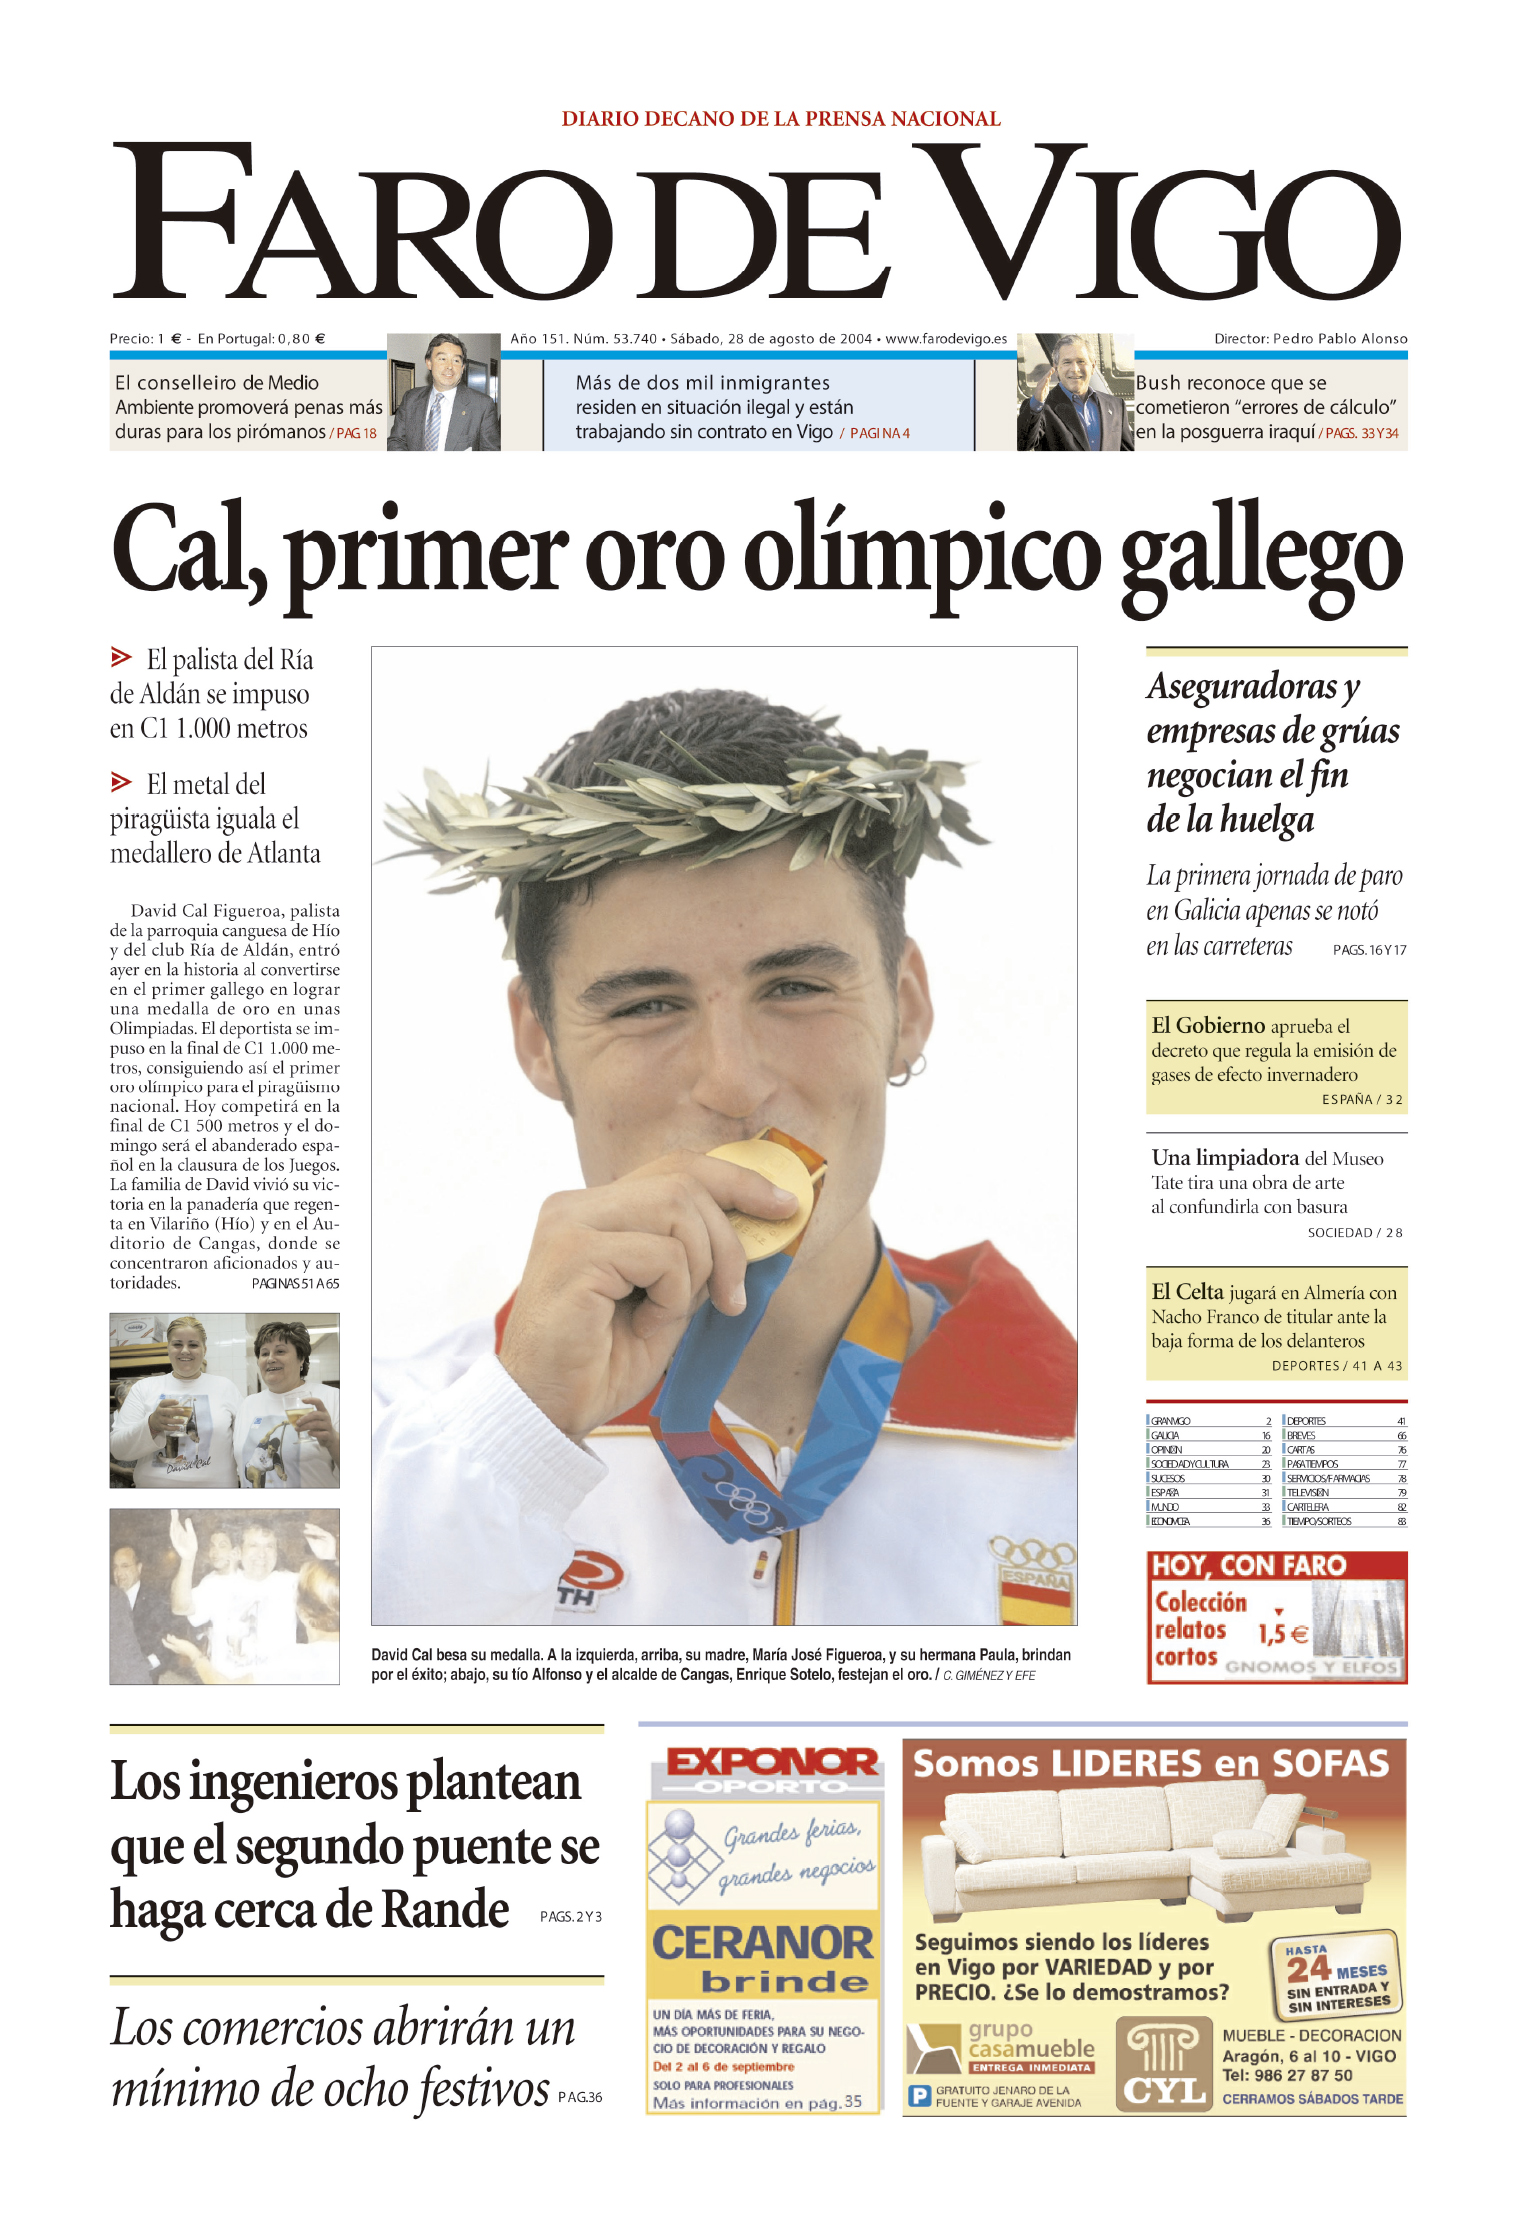 Cal primer oro olímpico gallego